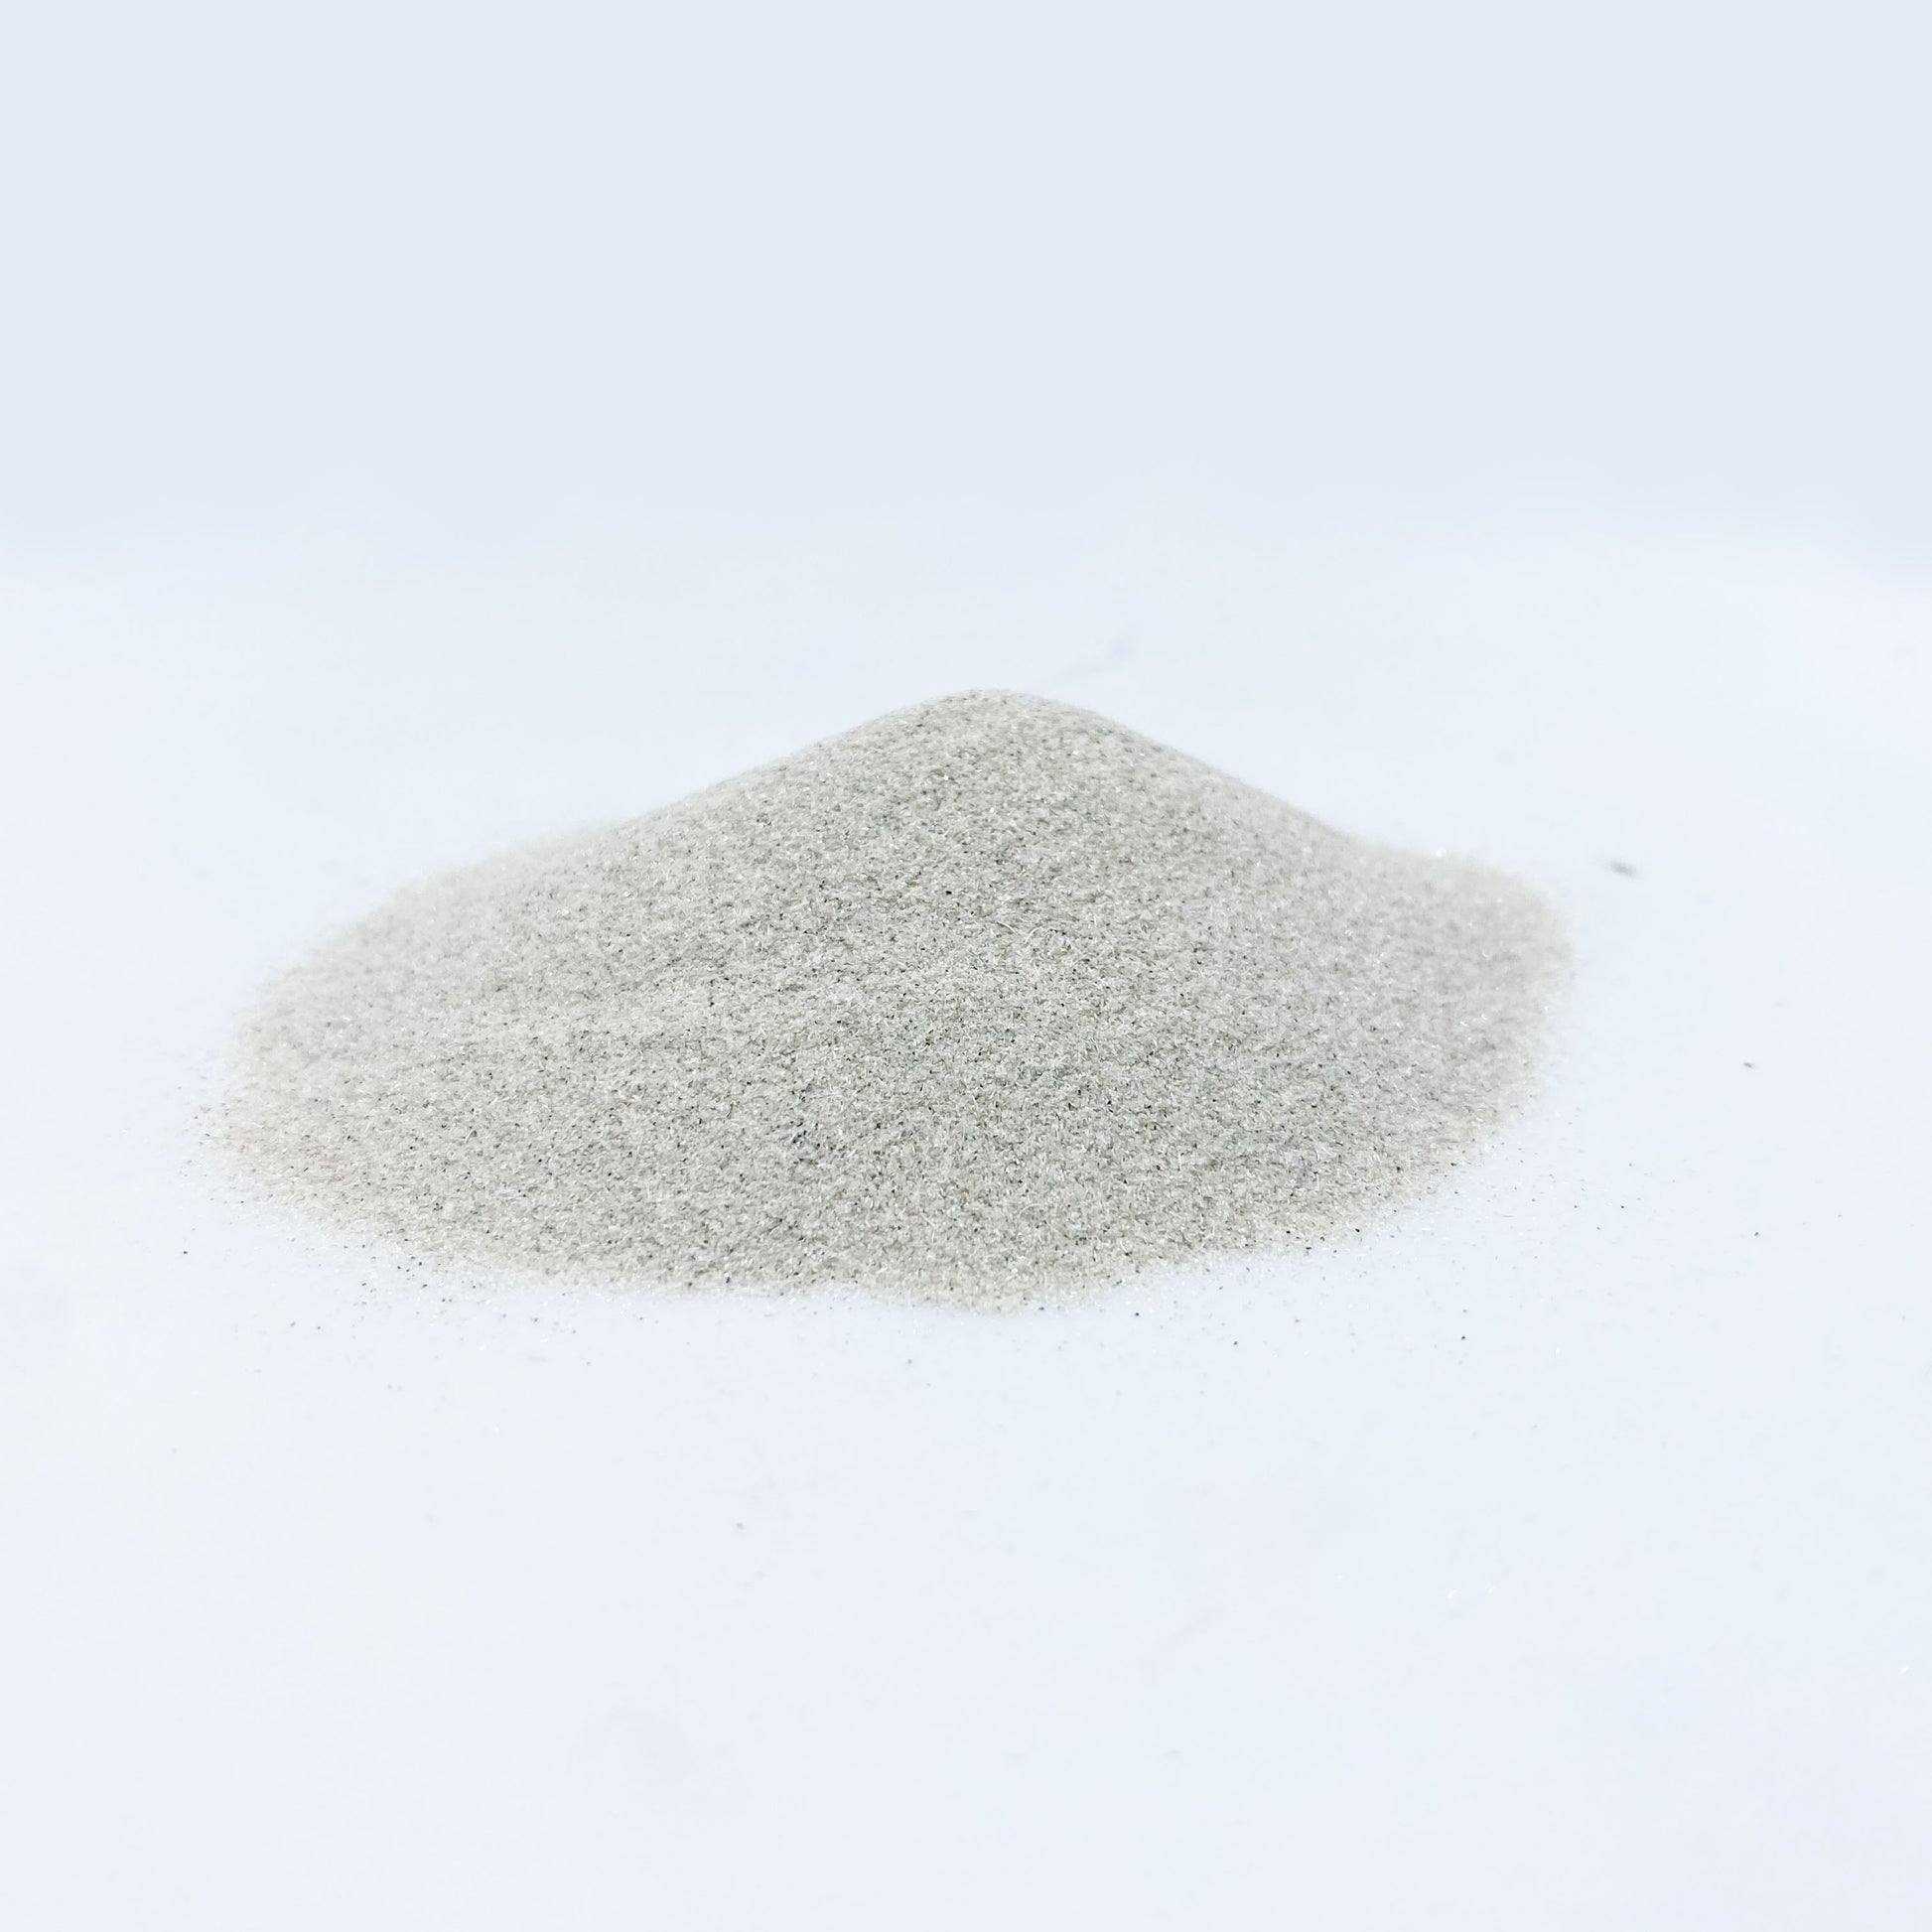 100.00 Cts Raw Natural White Diamond Dust Powder Rough Lot - Genuine  Gemstone 